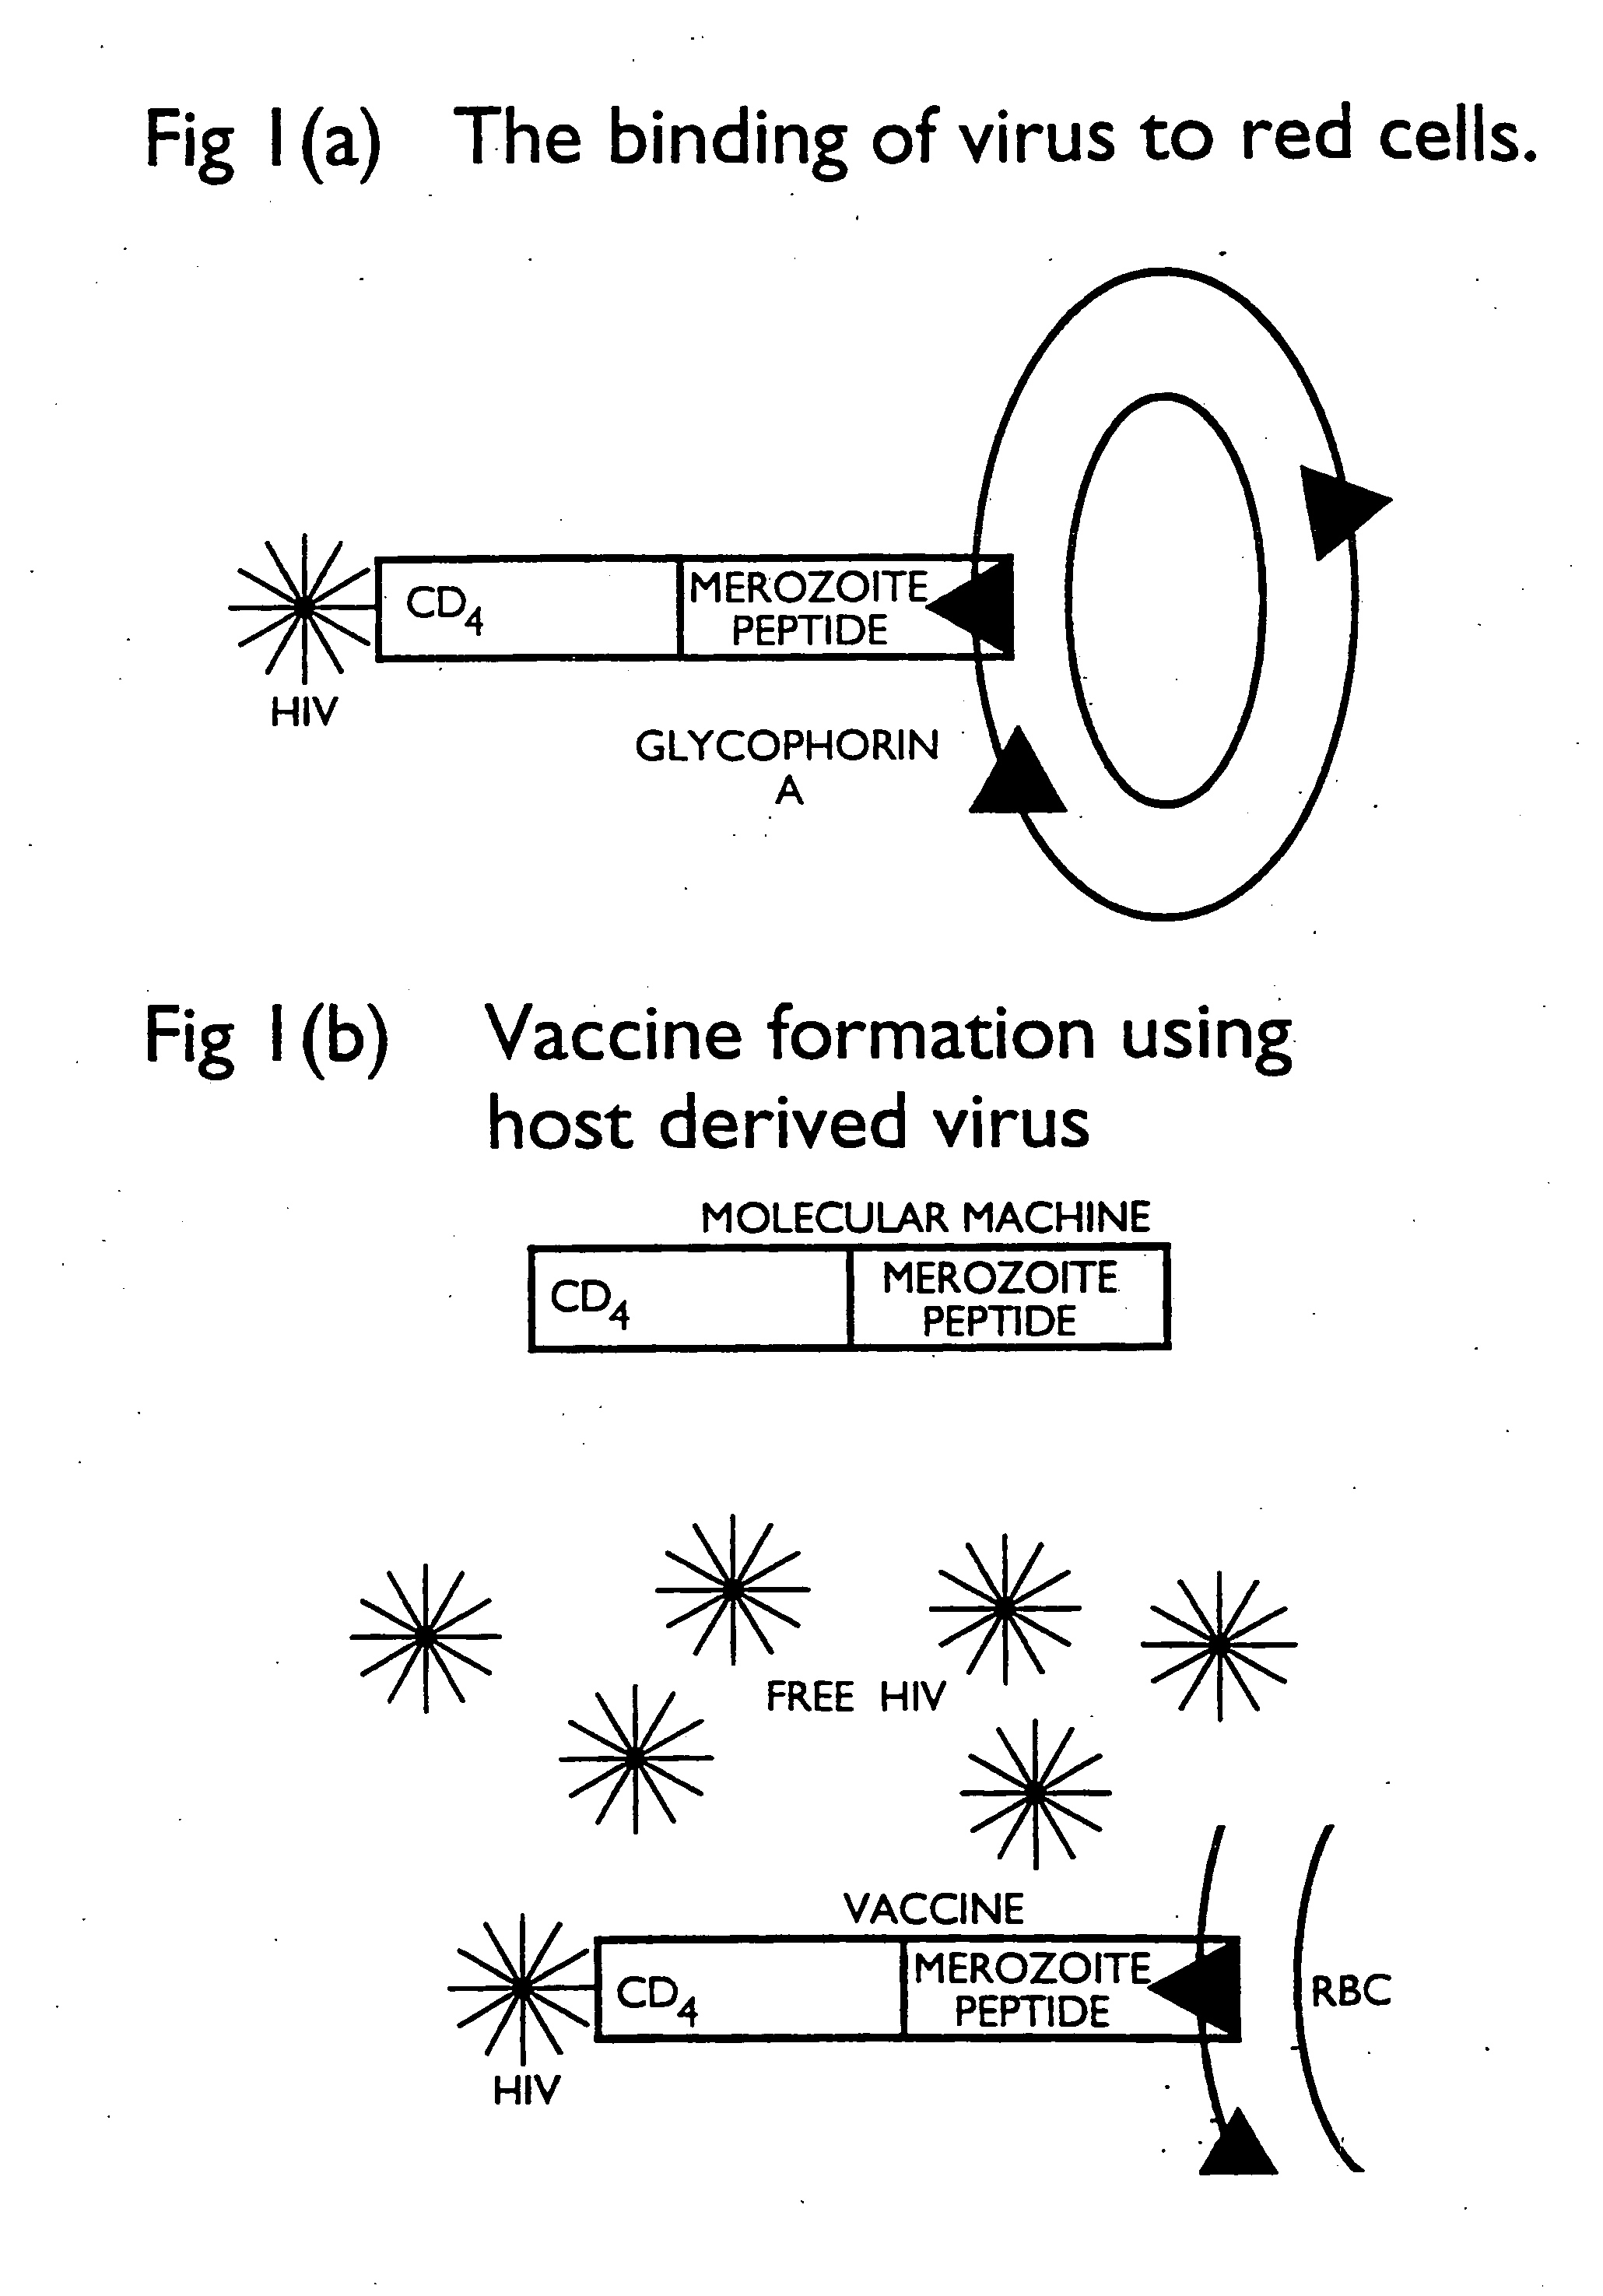 Anti-viral fusion peptides